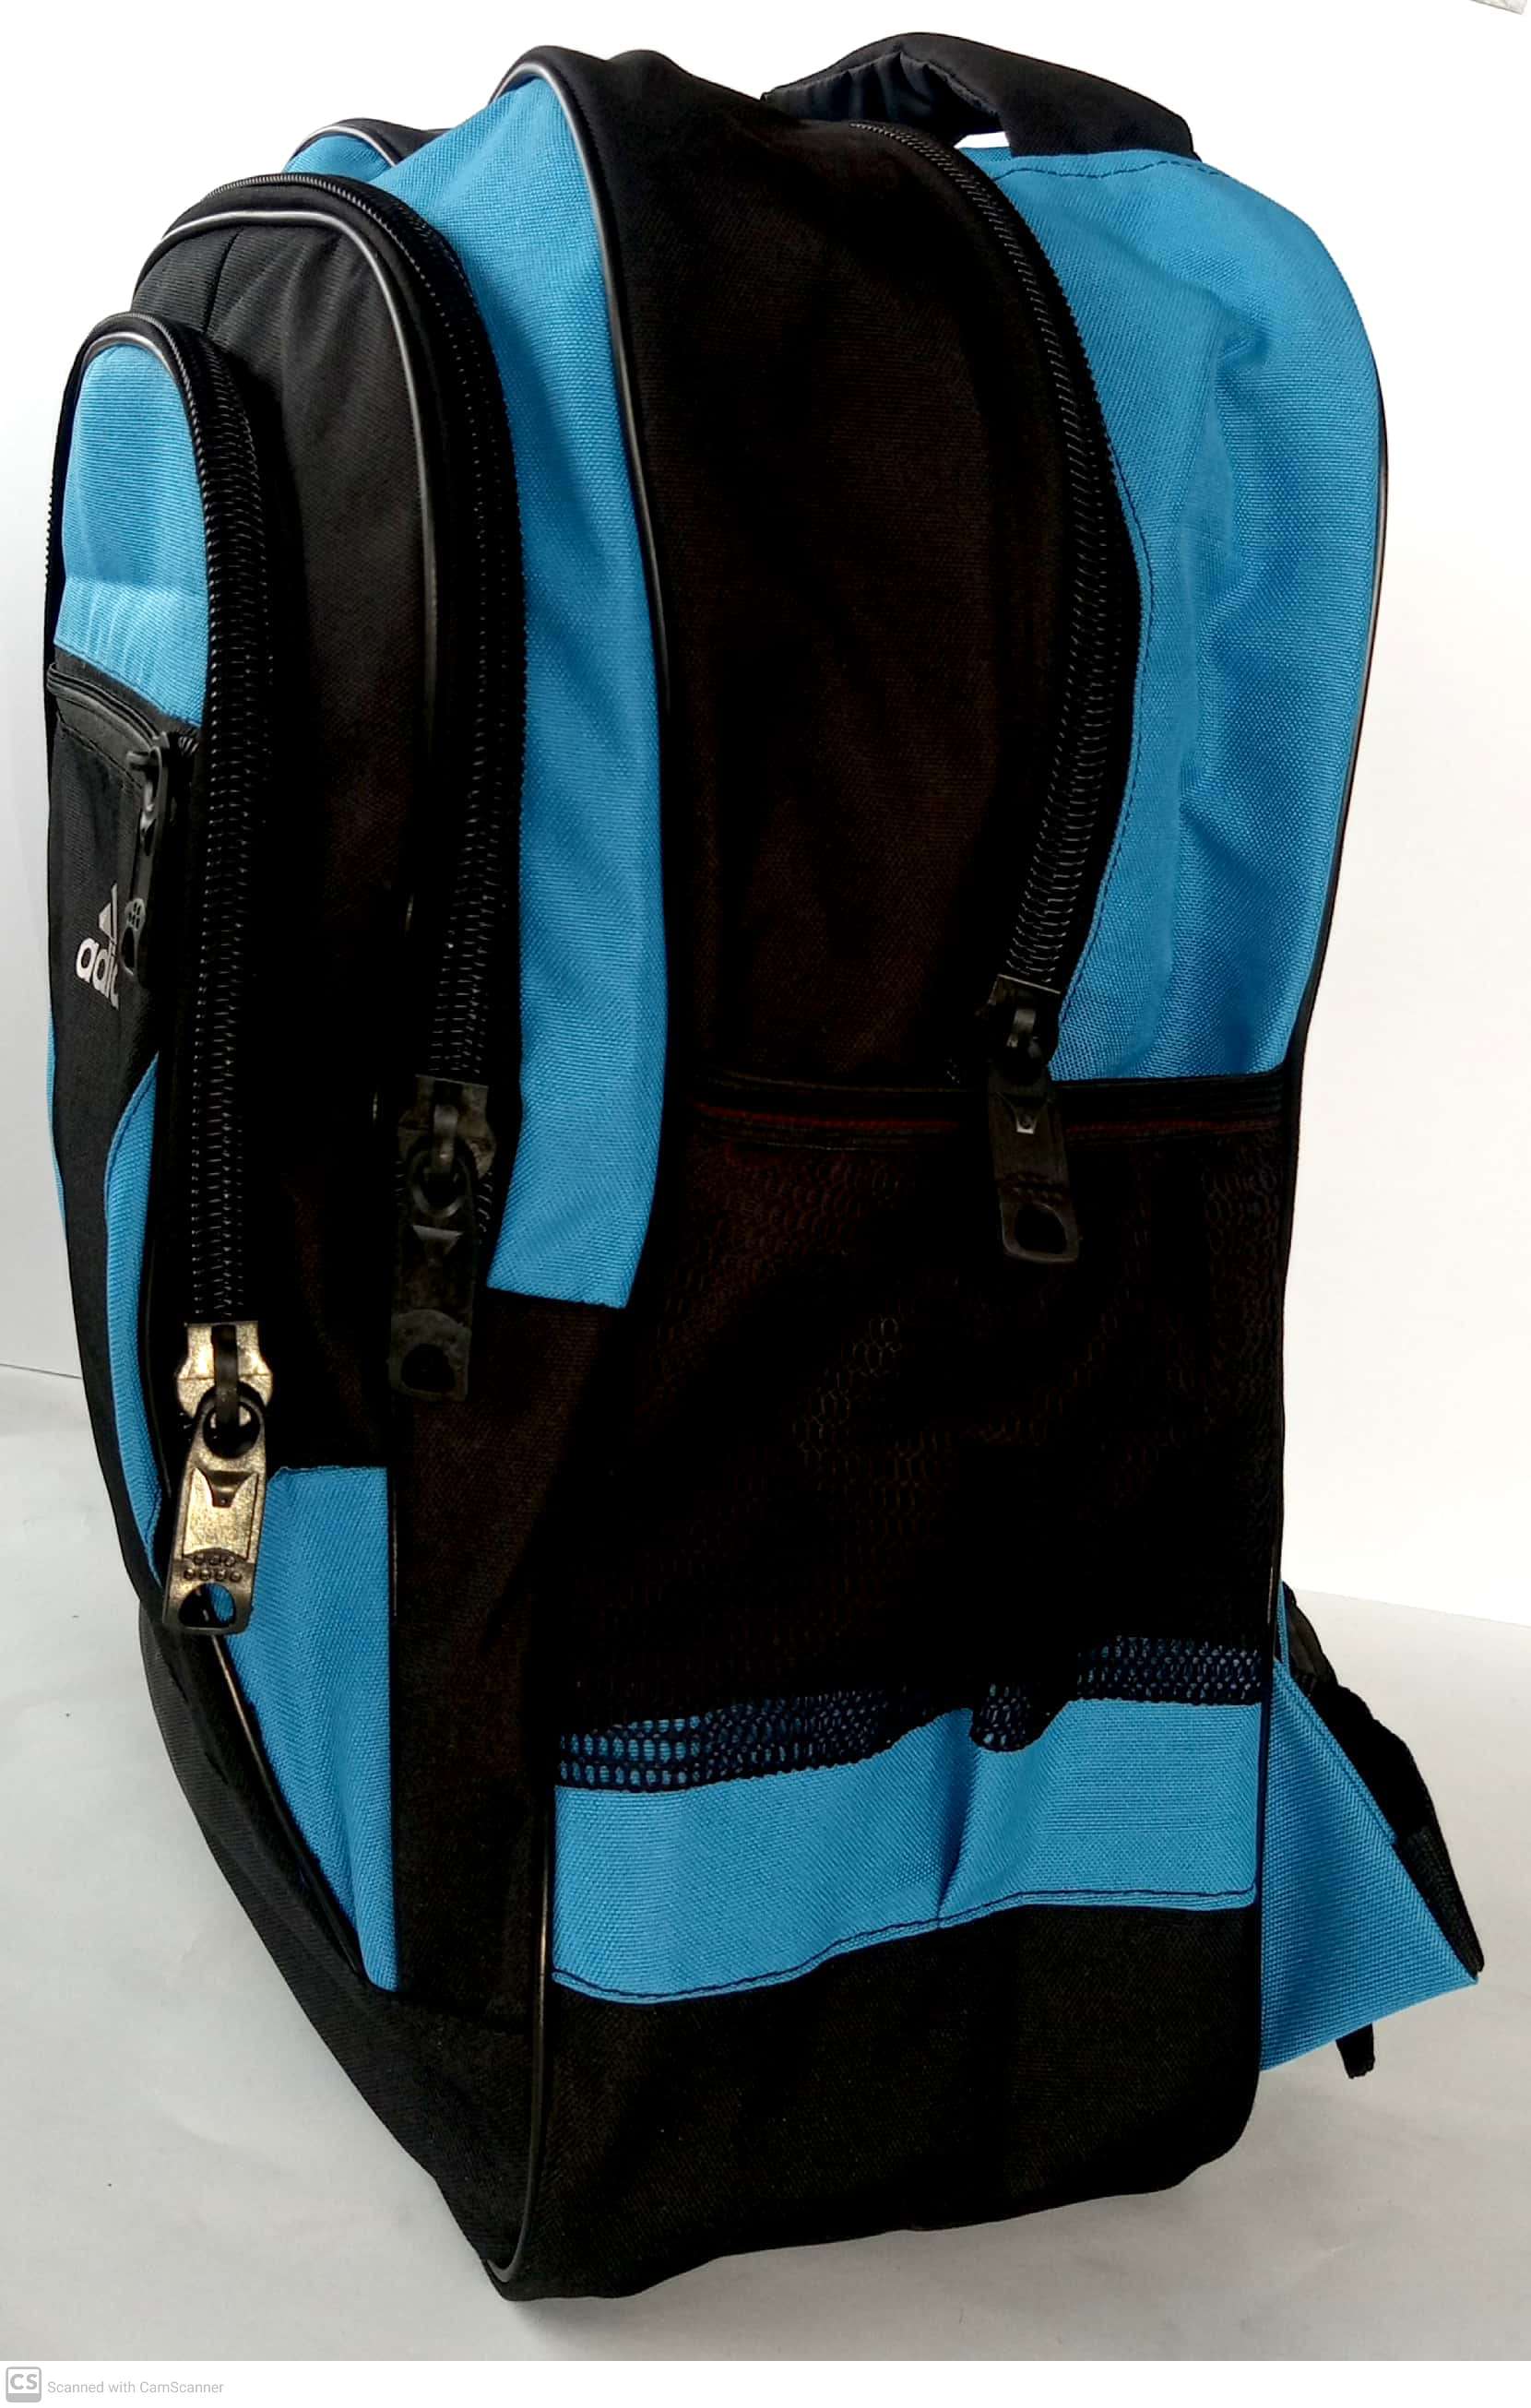 Shop Affordable Replica Handbags in Dubai: First Copy, 7A Replica